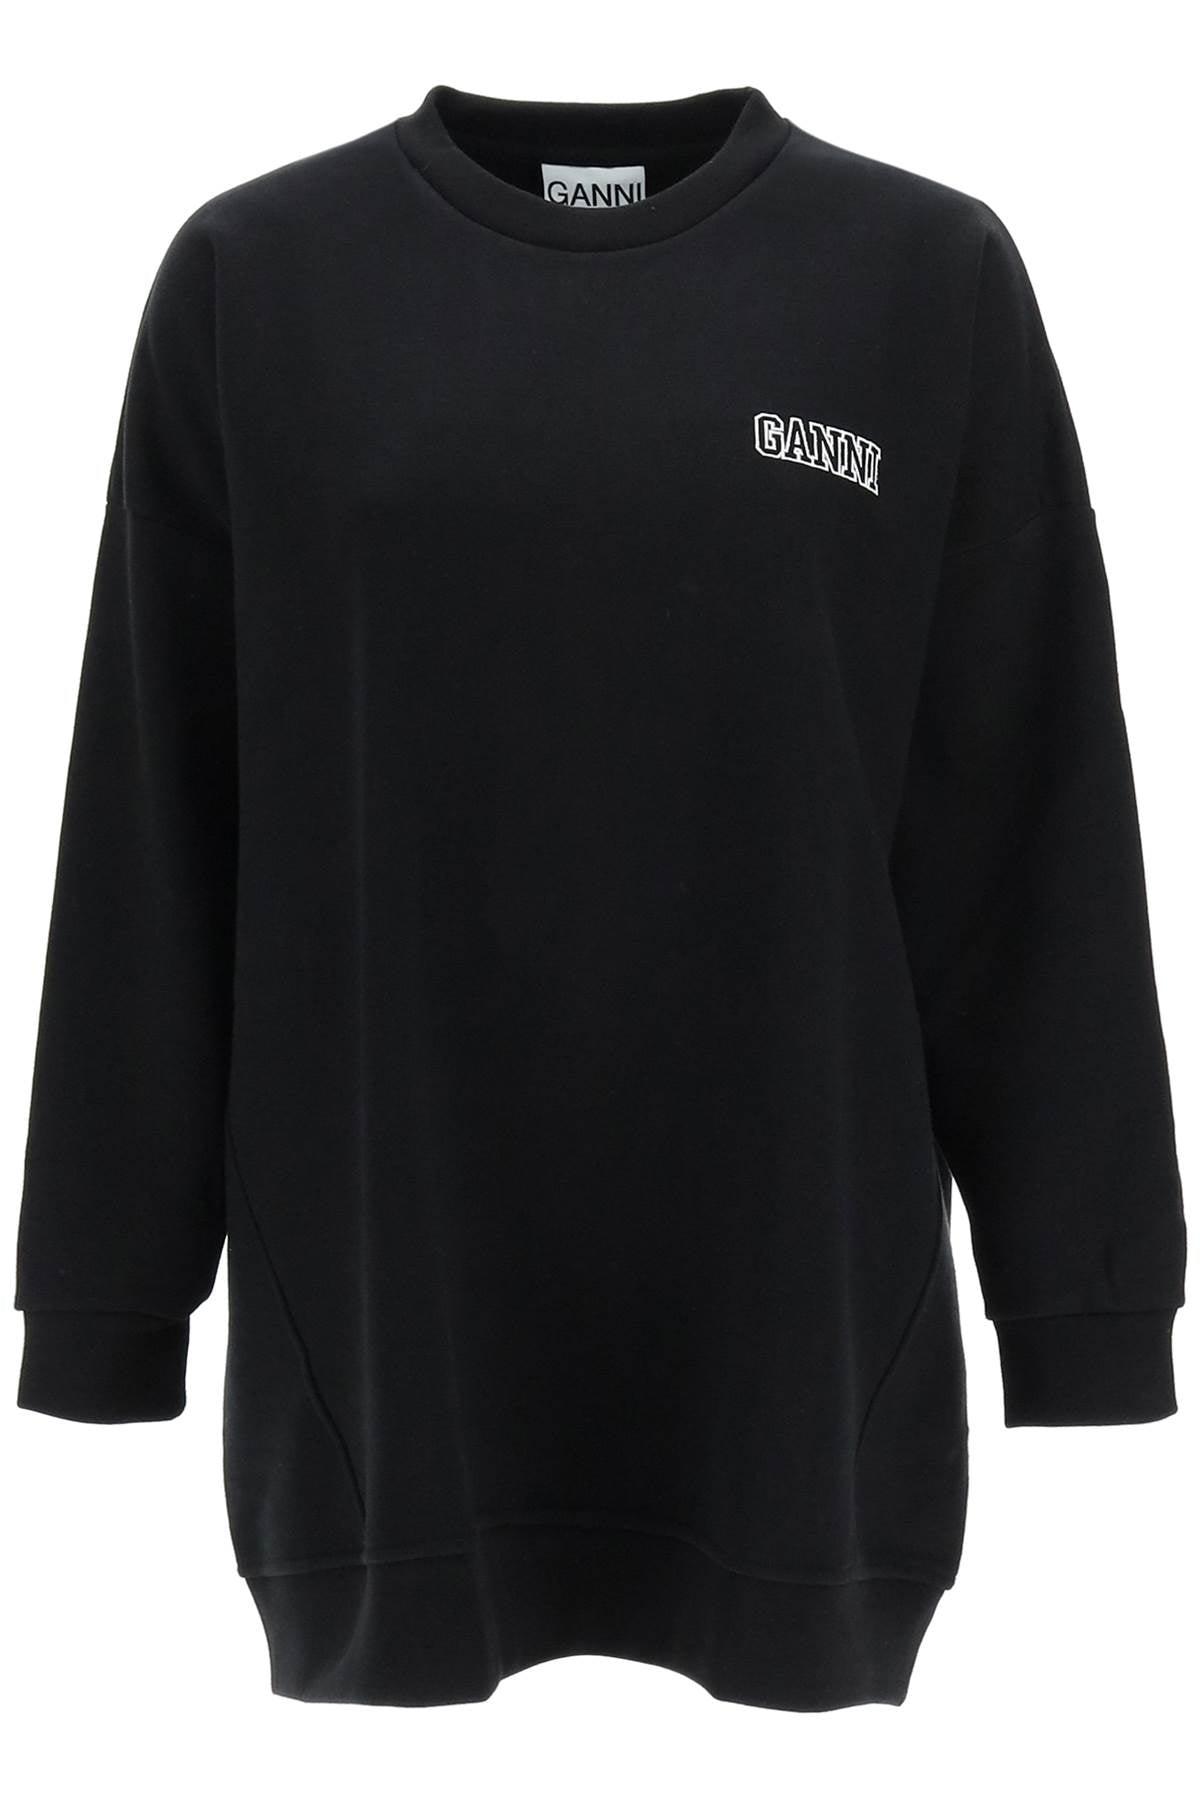 Ganni Oversized Sweatshirt With Logo Embroidery in Black | Lyst